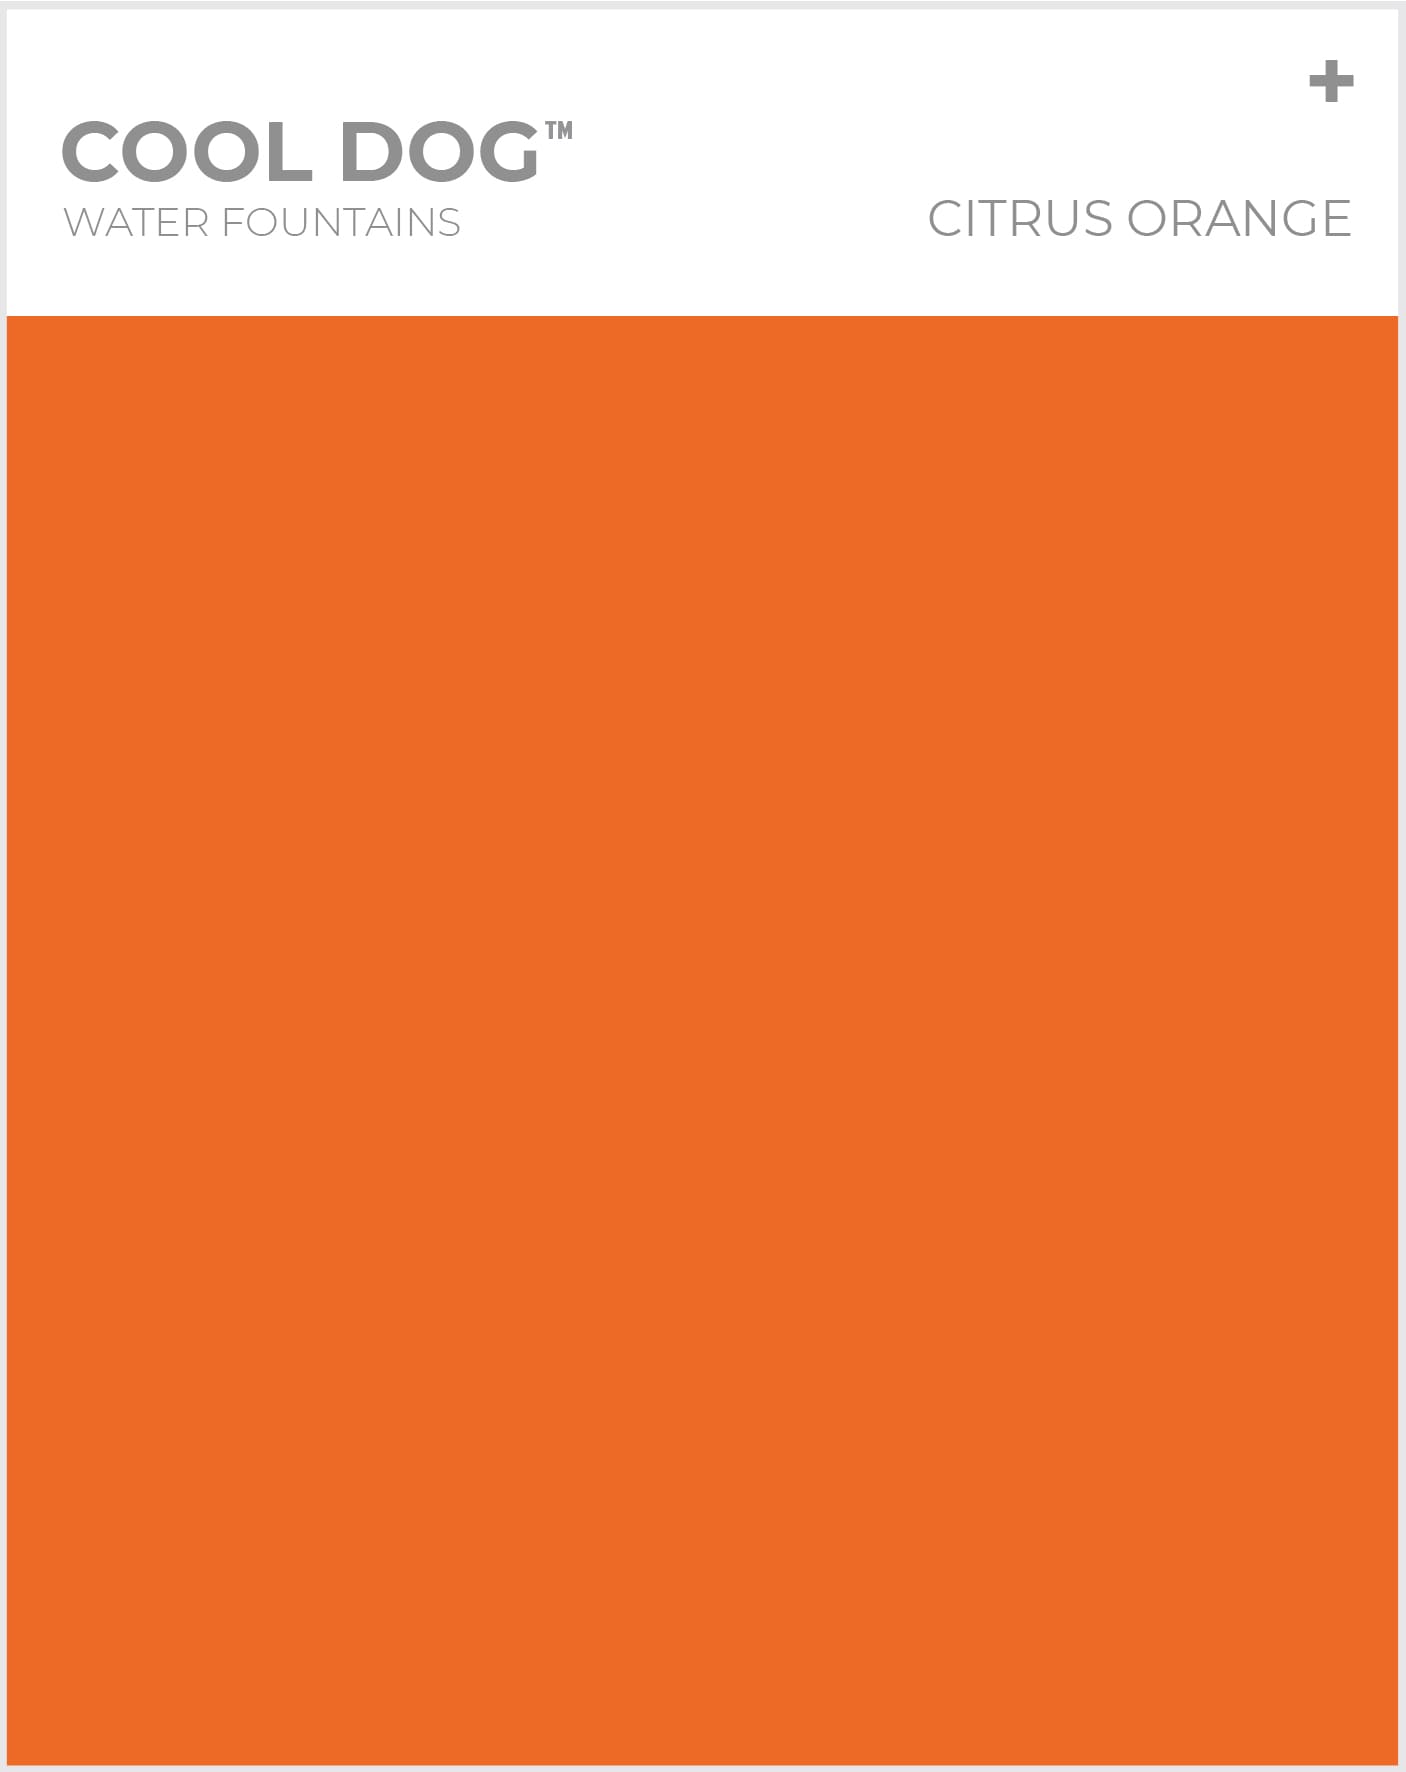 cool-dog-water-fountains-citrus-orange